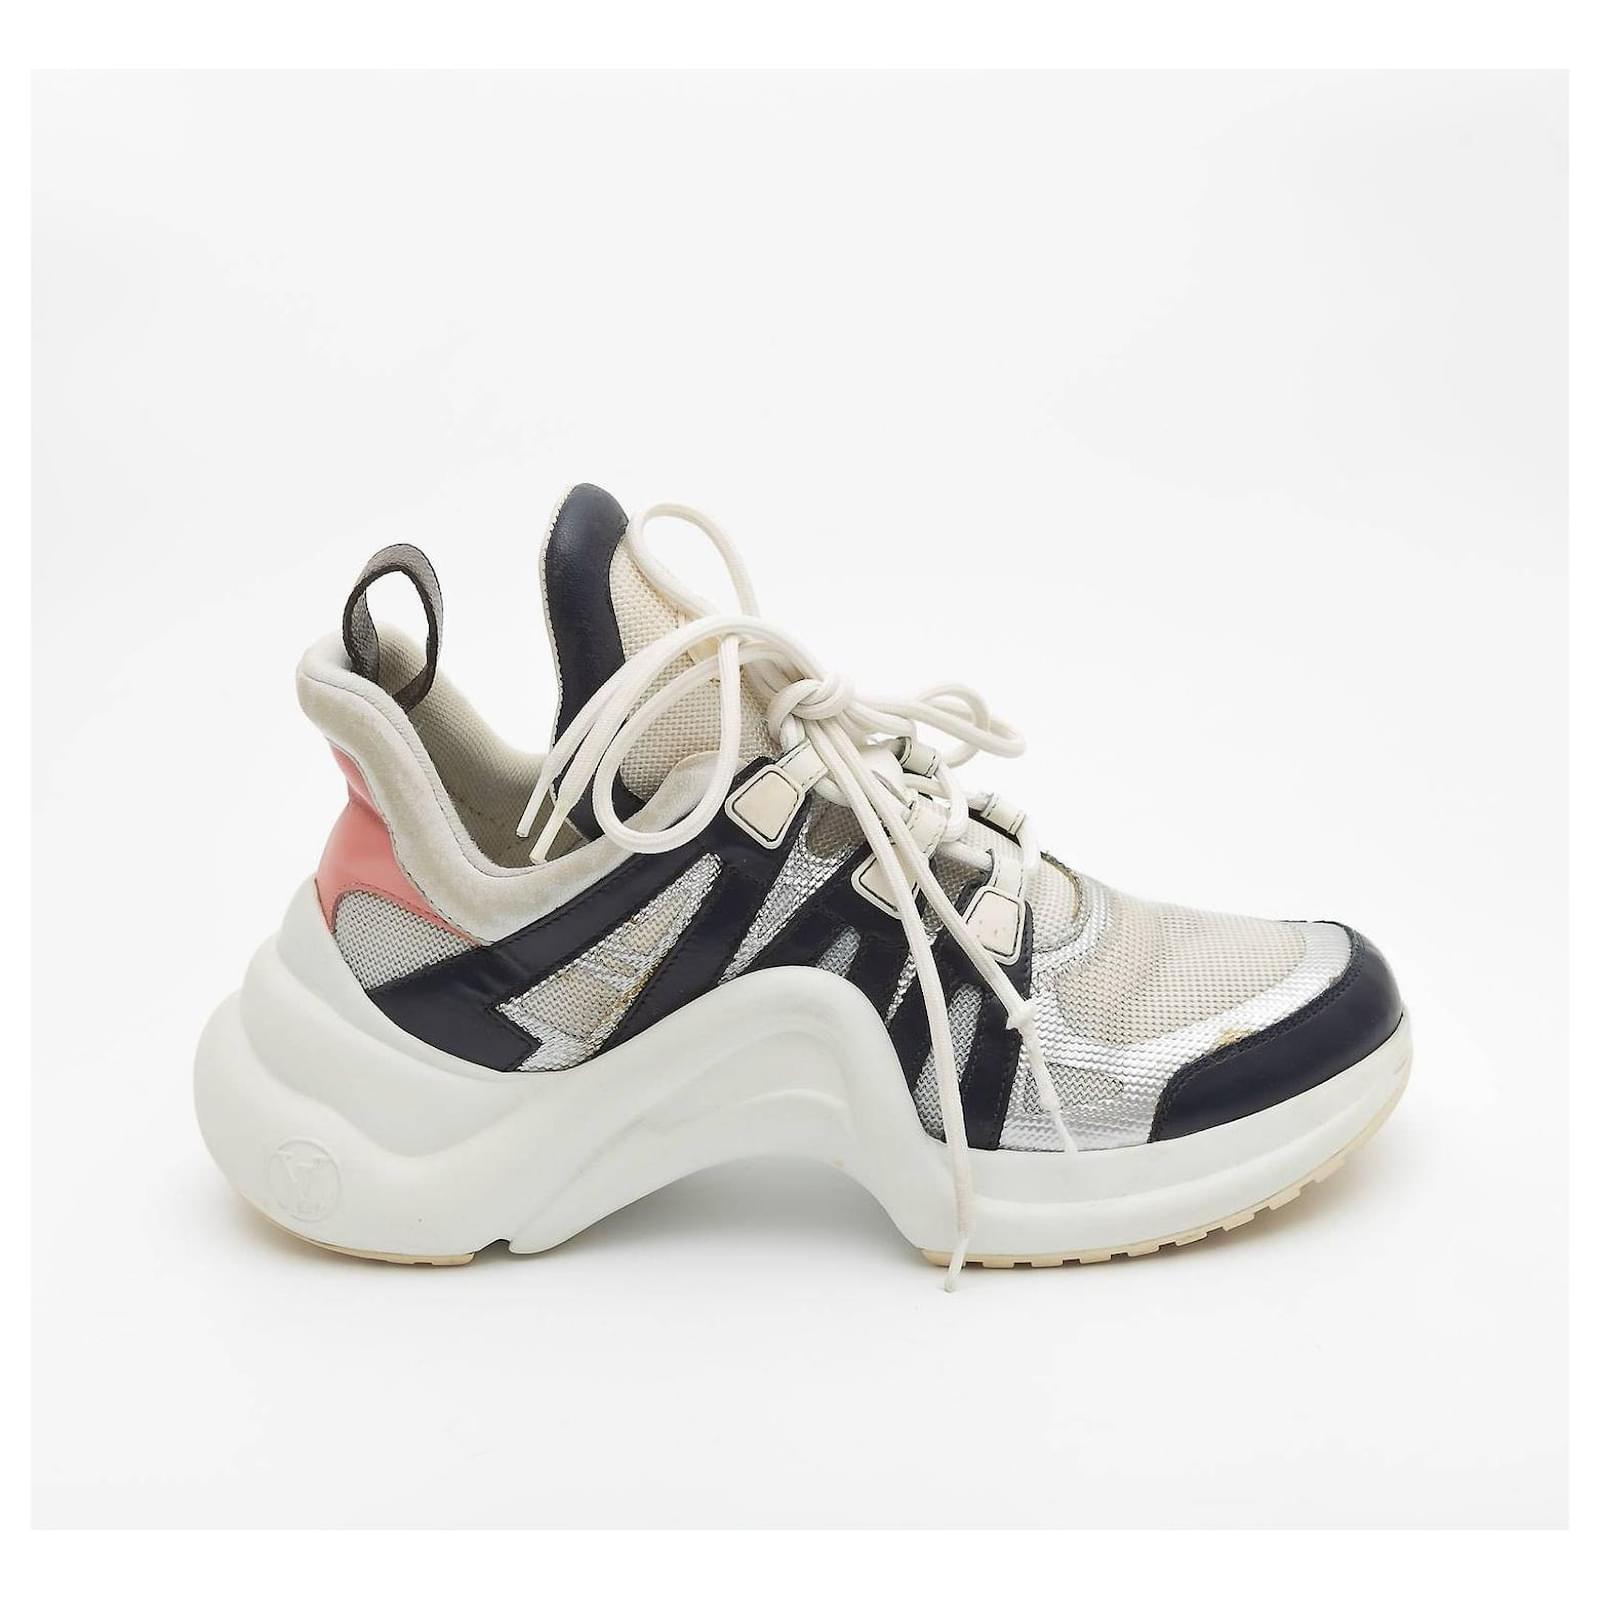 Vendôme Flex, le scarpe eleganti di Louis Vuitton comode come sneakers